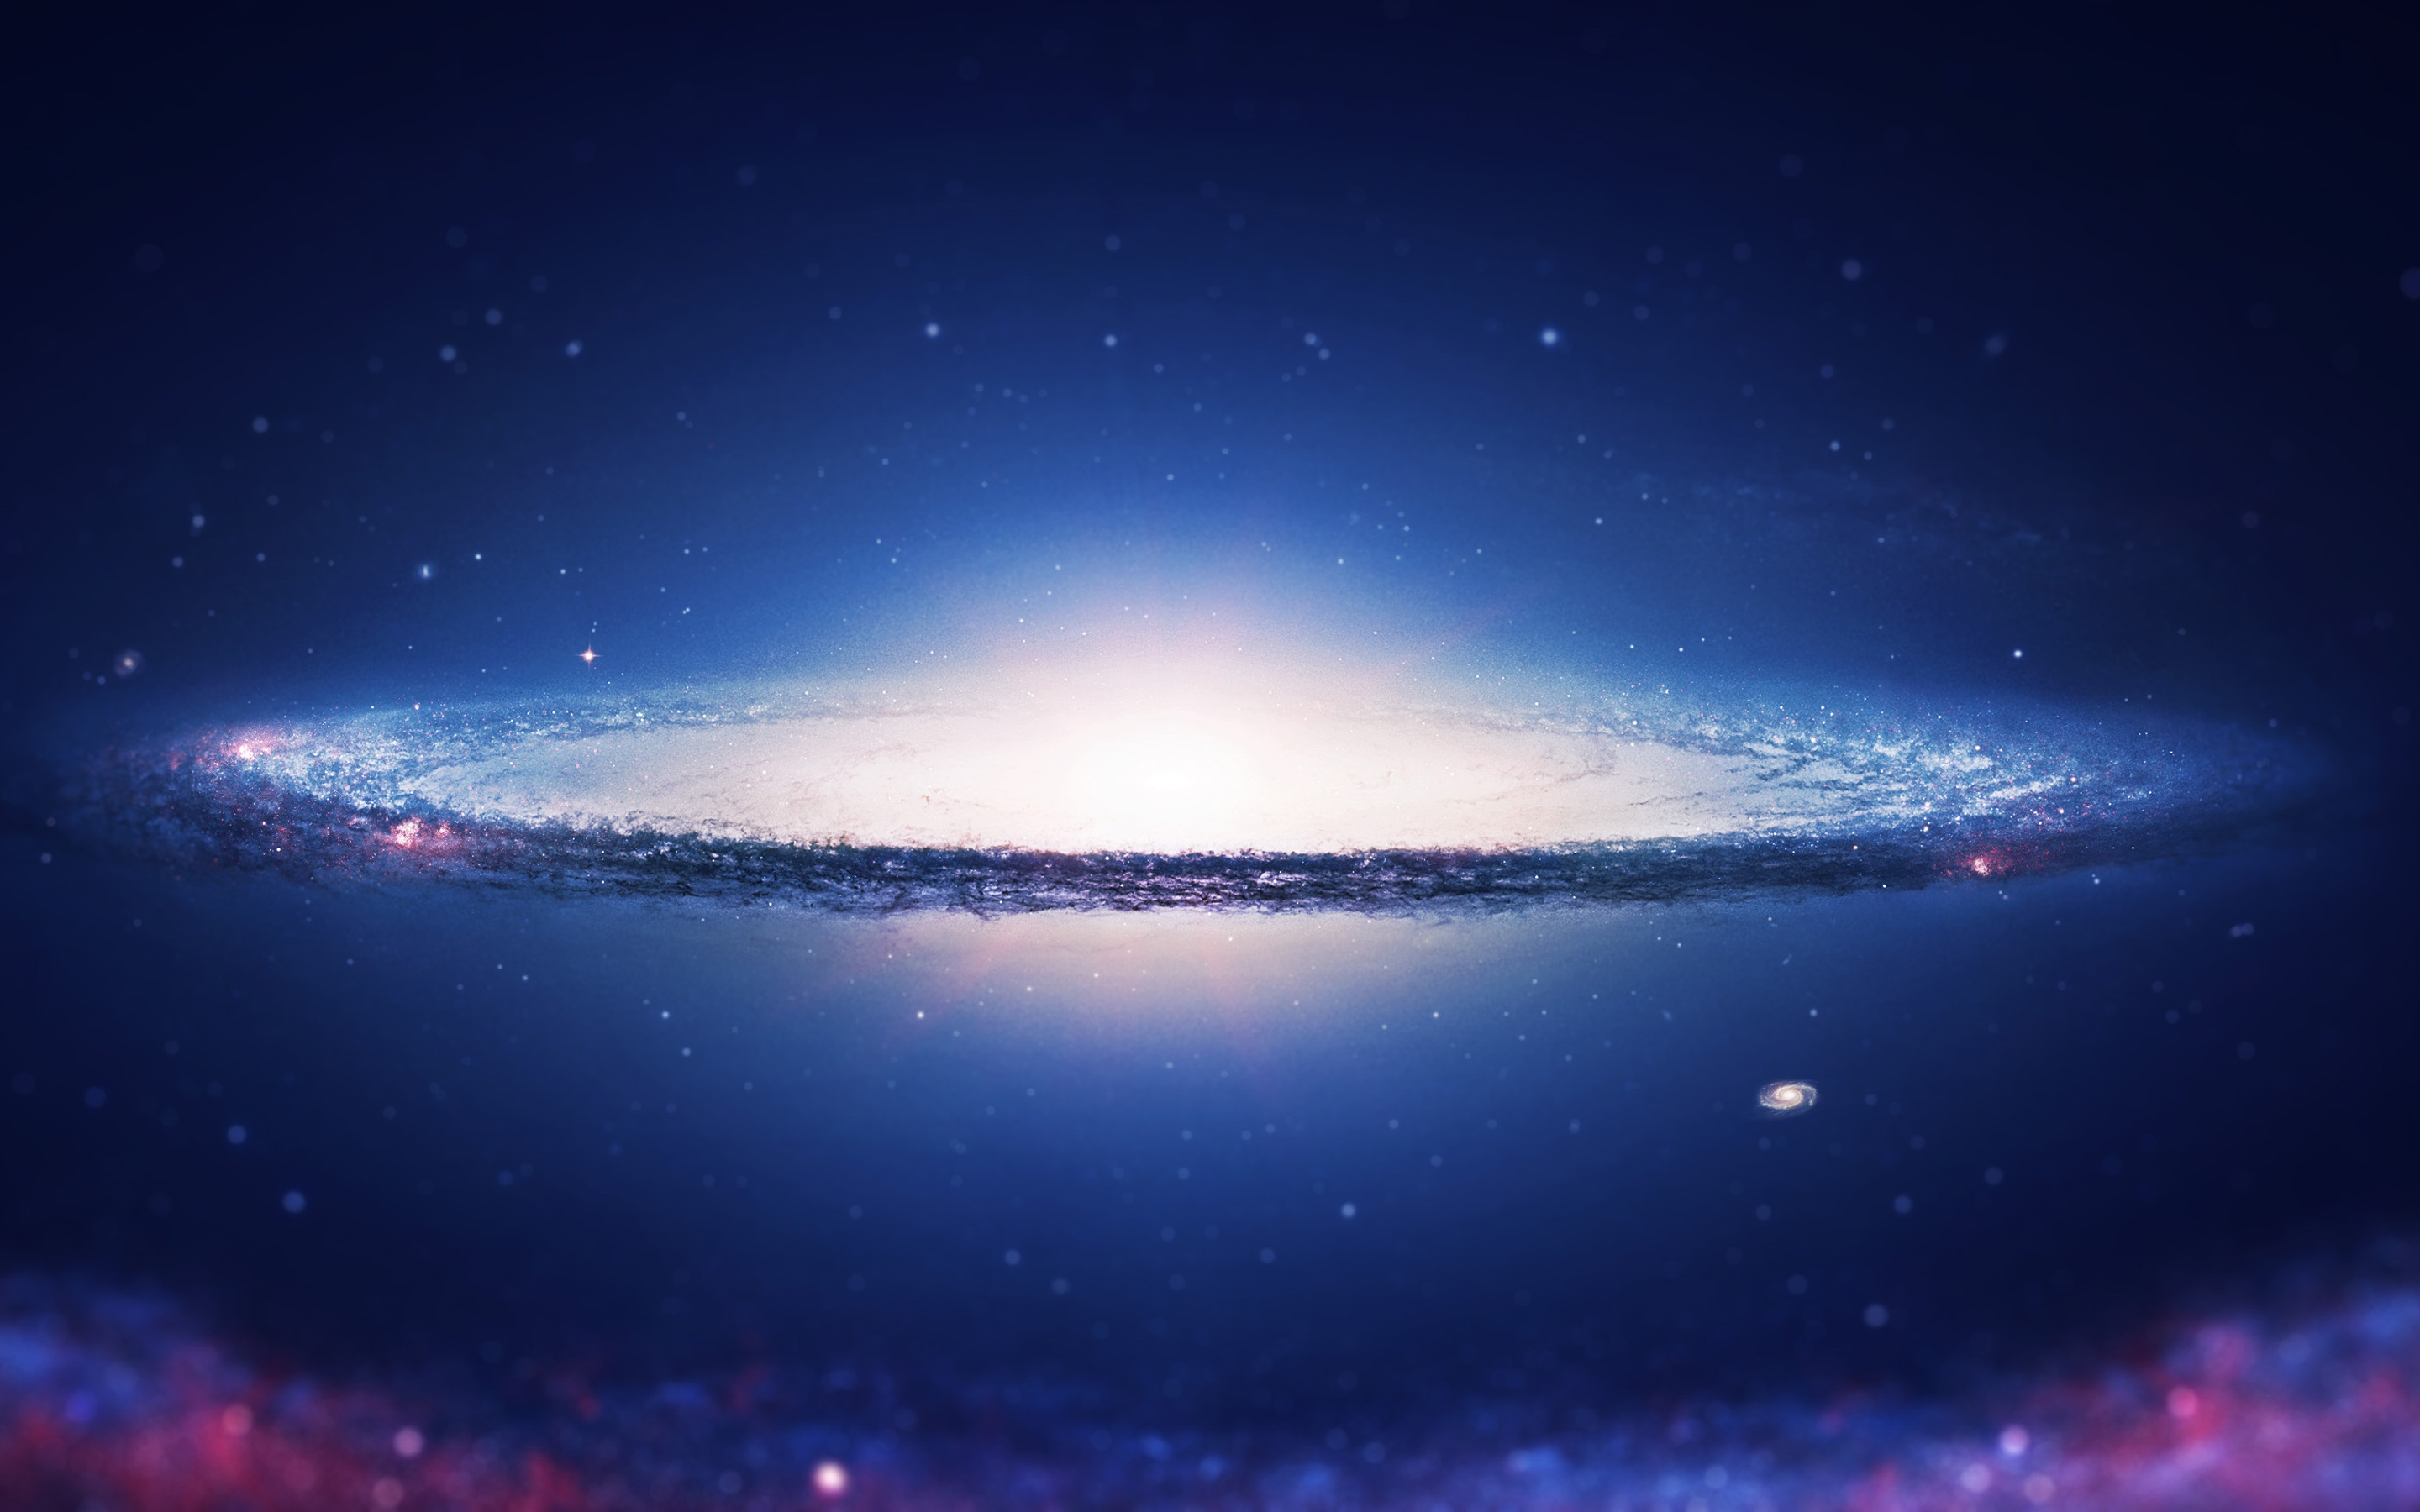 Free Universe Backgrounds | PixelsTalk.Net